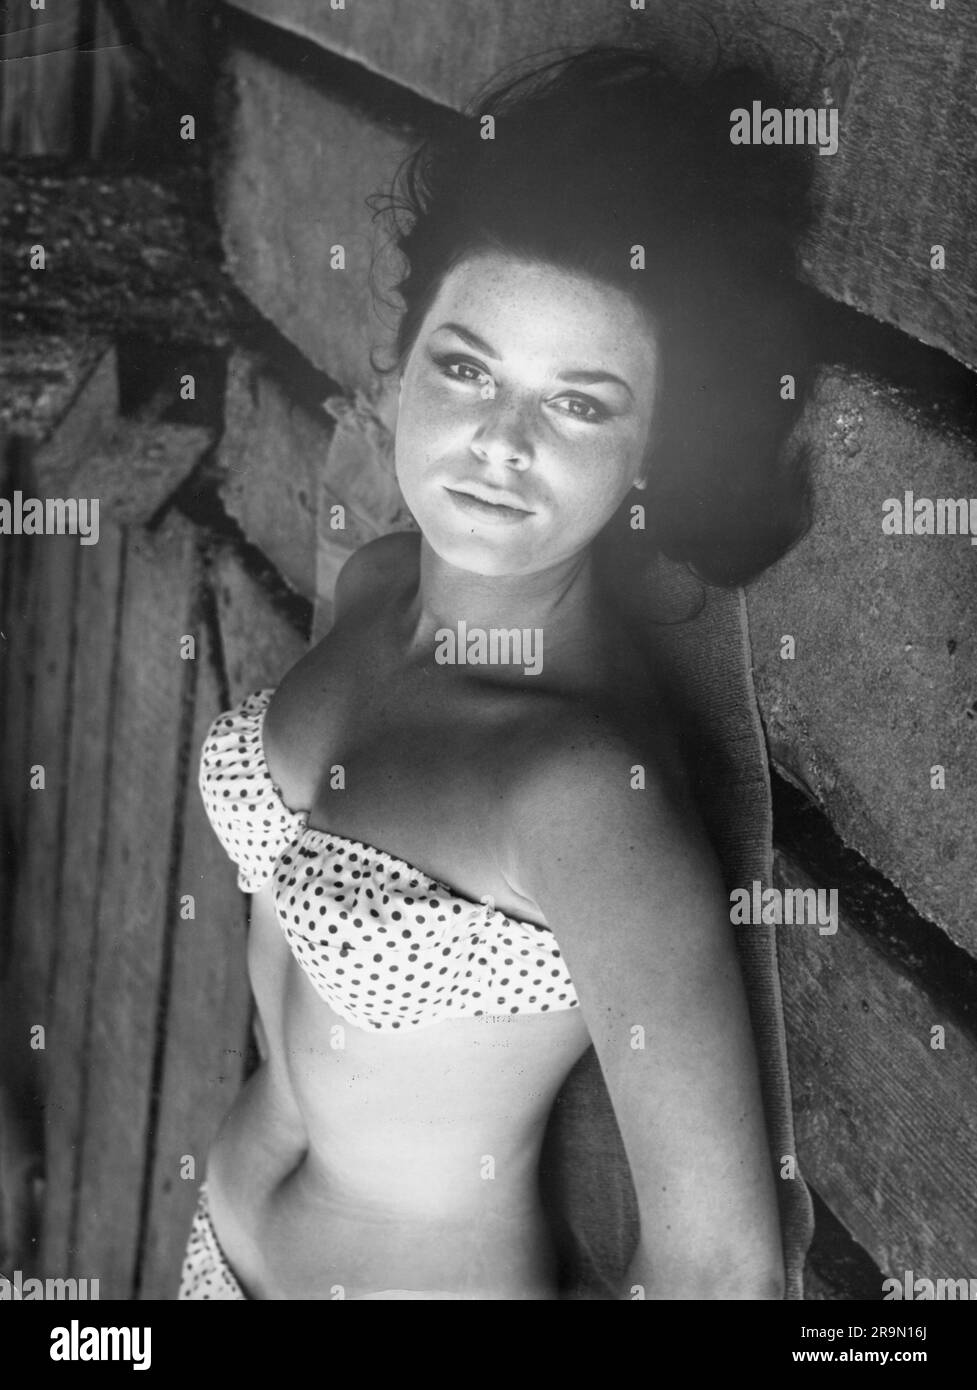 Woodcock, Carmen, British model, wearing bikini, 1960s, ADDITIONAL-RIGHTS-CLEARANCE-INFO-NOT-AVAILABLE Stock Photo